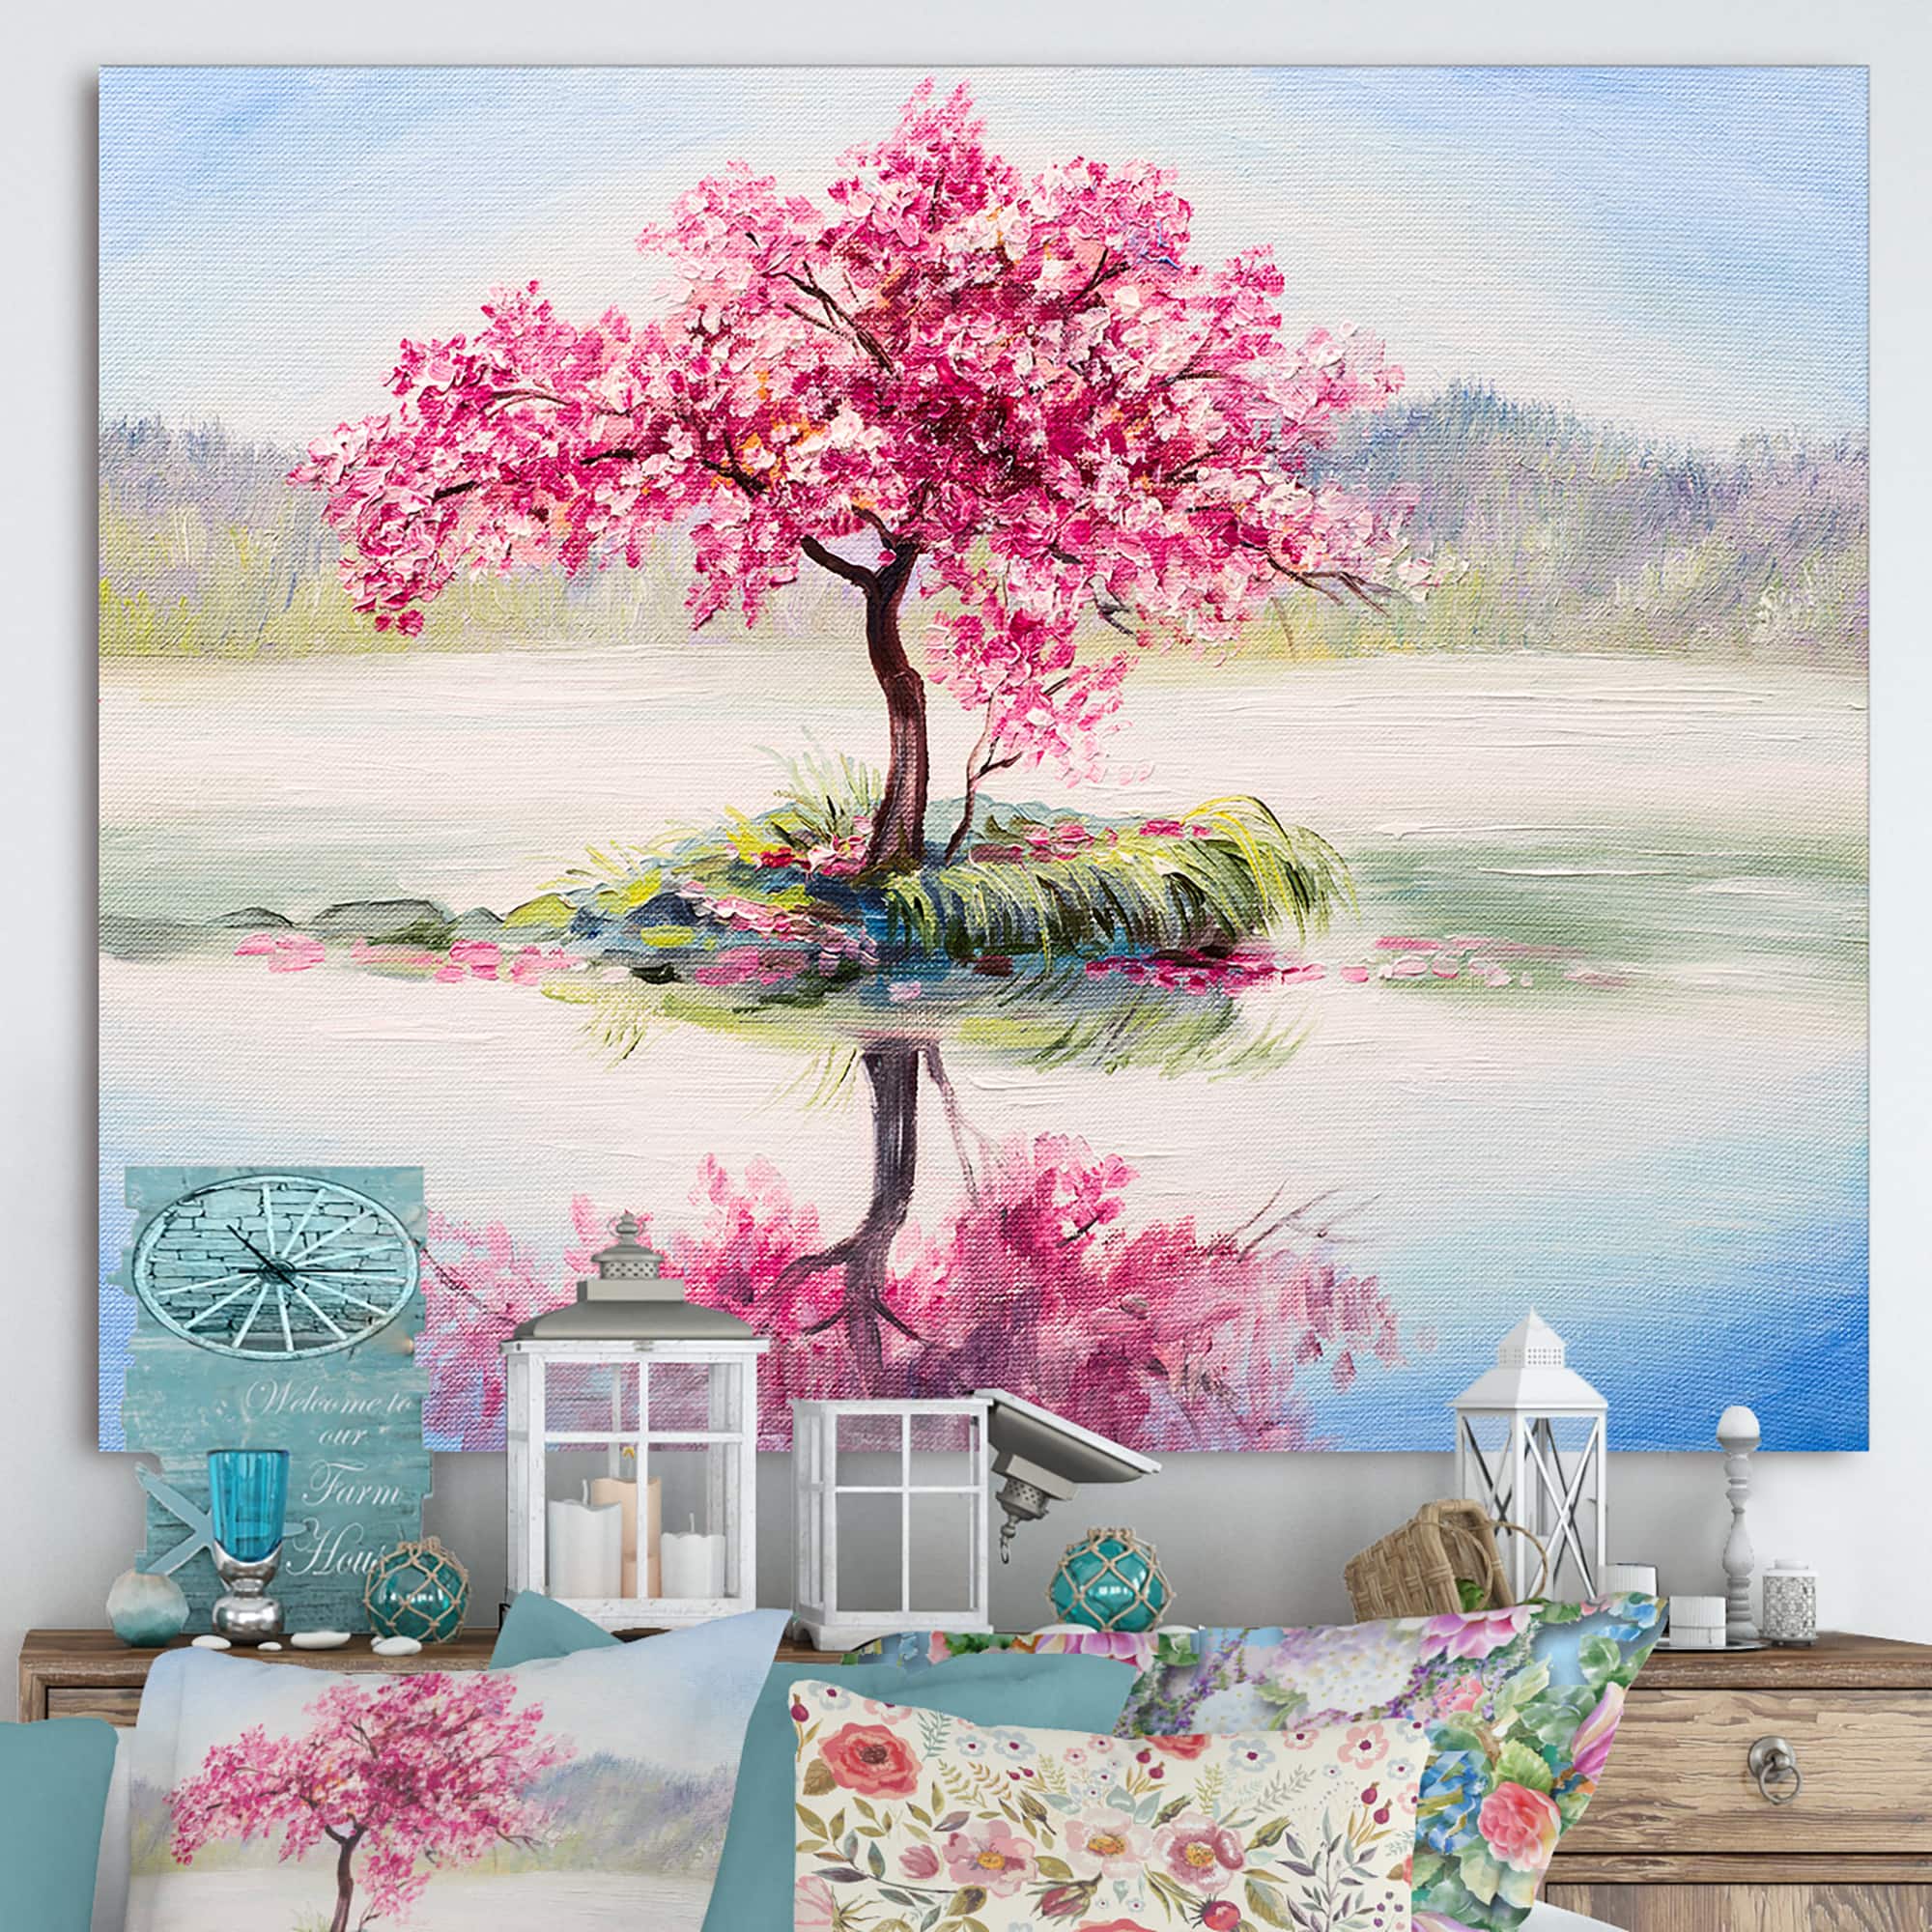 Designart - Japanese Cherry Blossom Tree On Little Idyllic IsLand - Farmhouse Canvas Wall Art Print